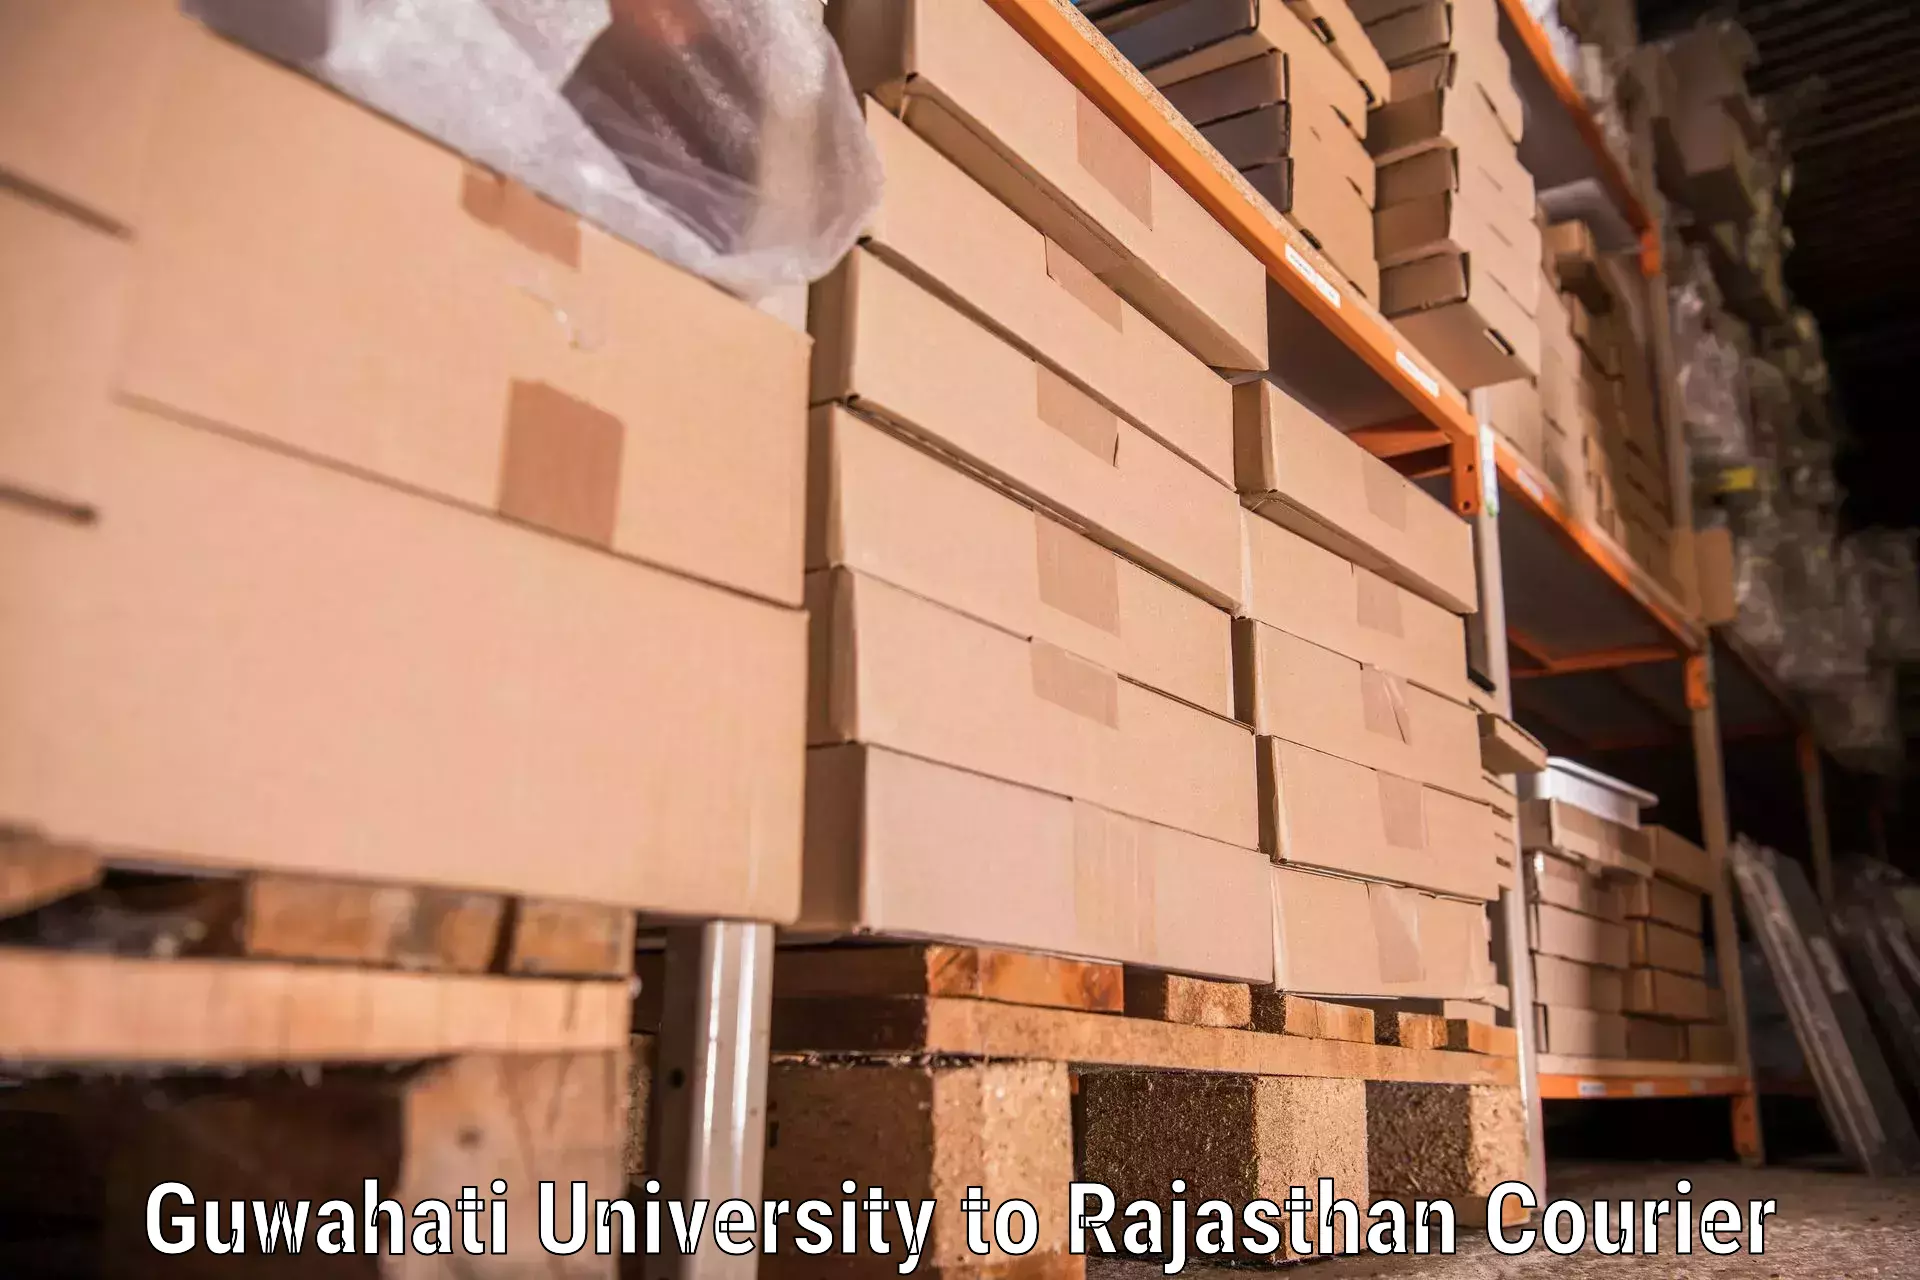 Professional home movers Guwahati University to Kishangarh